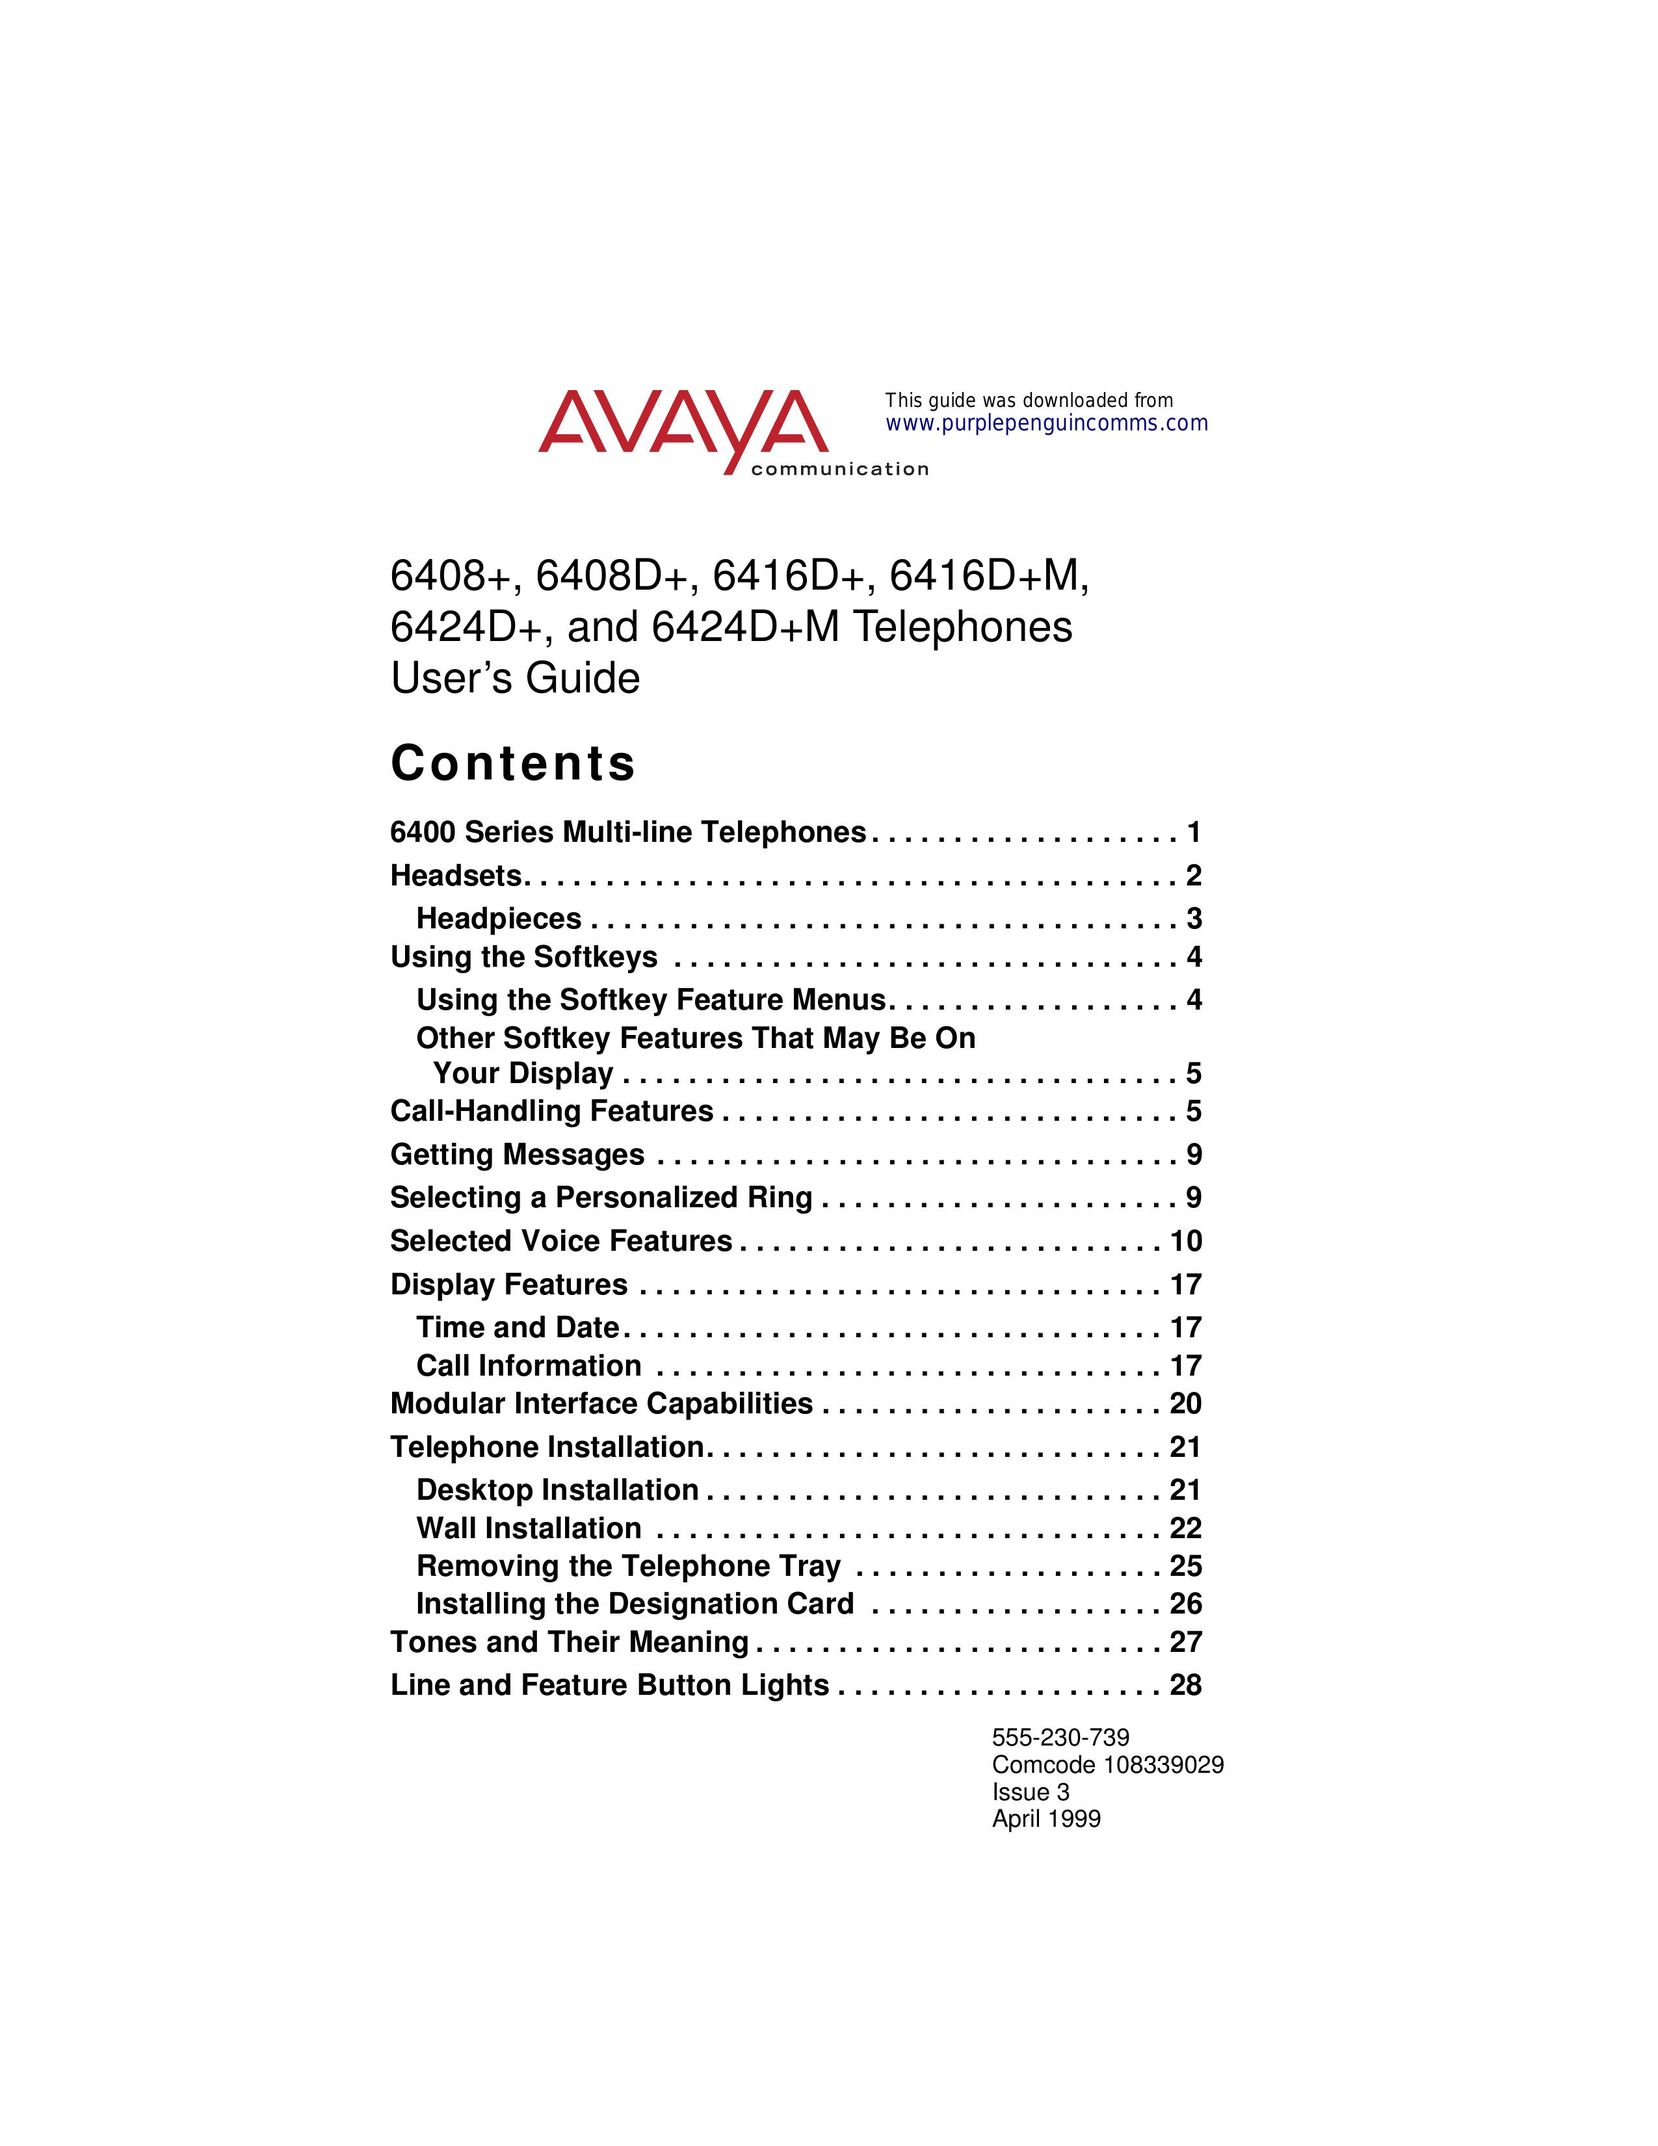 Avaya 6416D+M Cordless Telephone User Manual